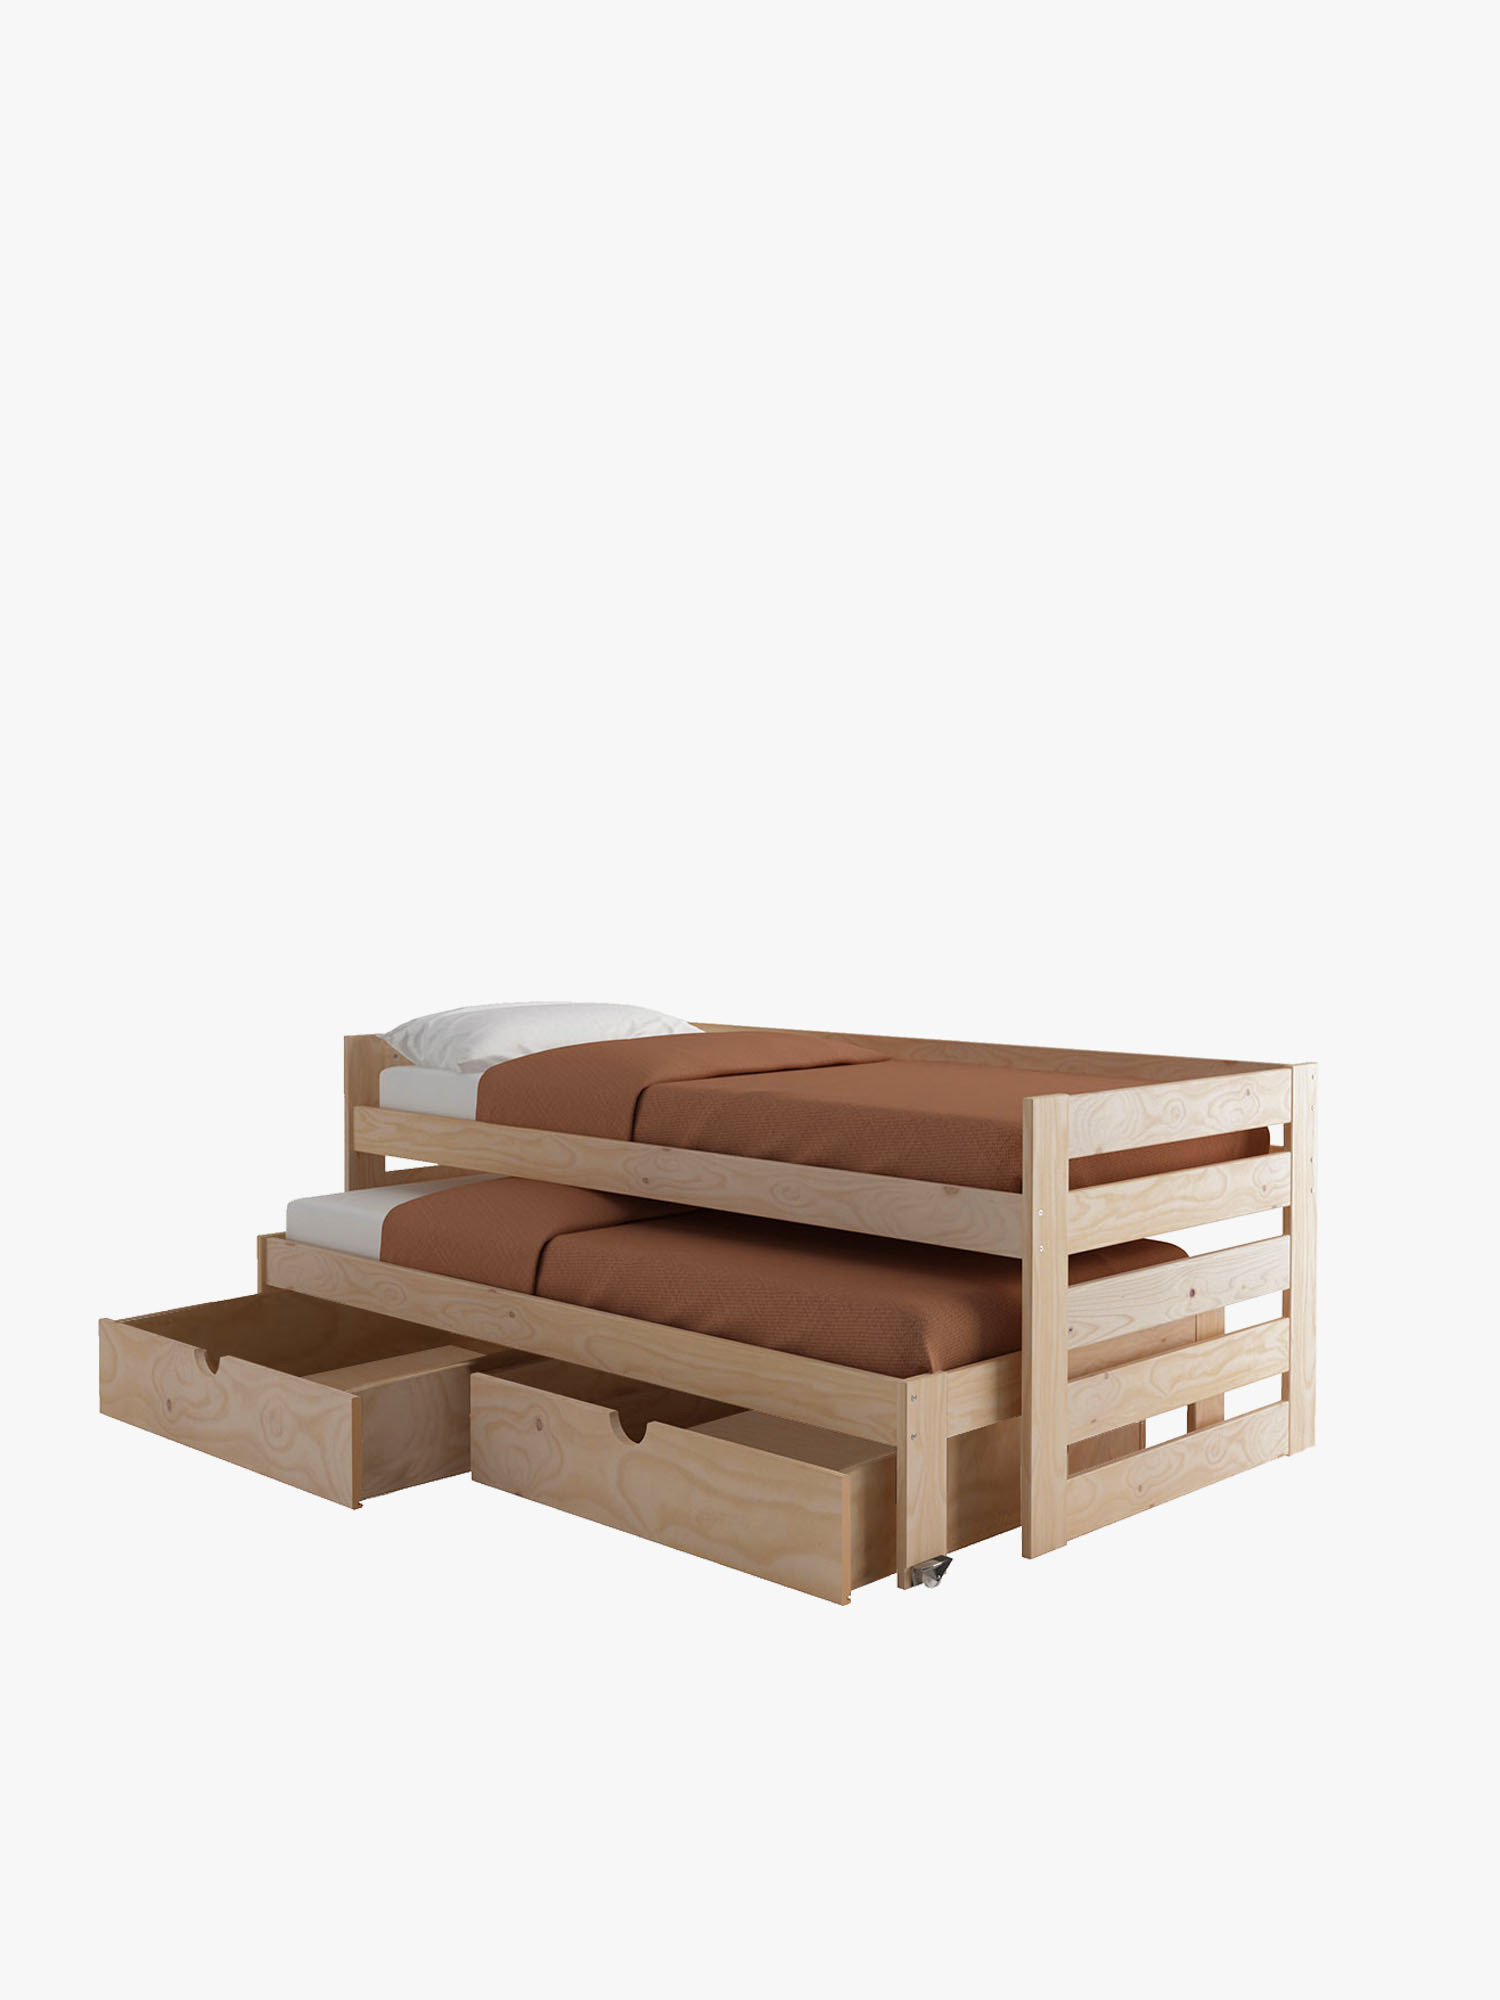 KecDuey Cama alta 90 x 200 cm, cama alta de madera con cajones de